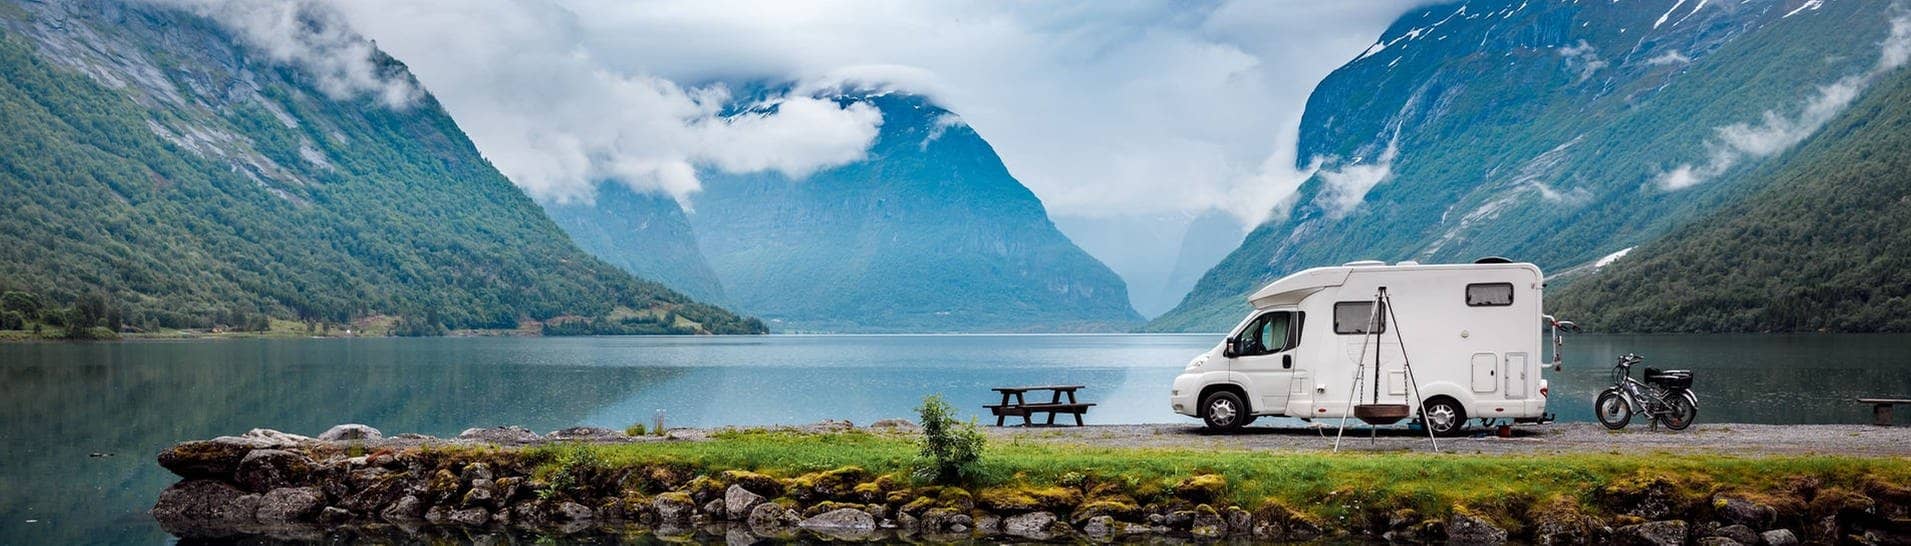 Wohnmobil vor Berg-Panorama an einem See (Foto: Adobe Stock/Gowtham)